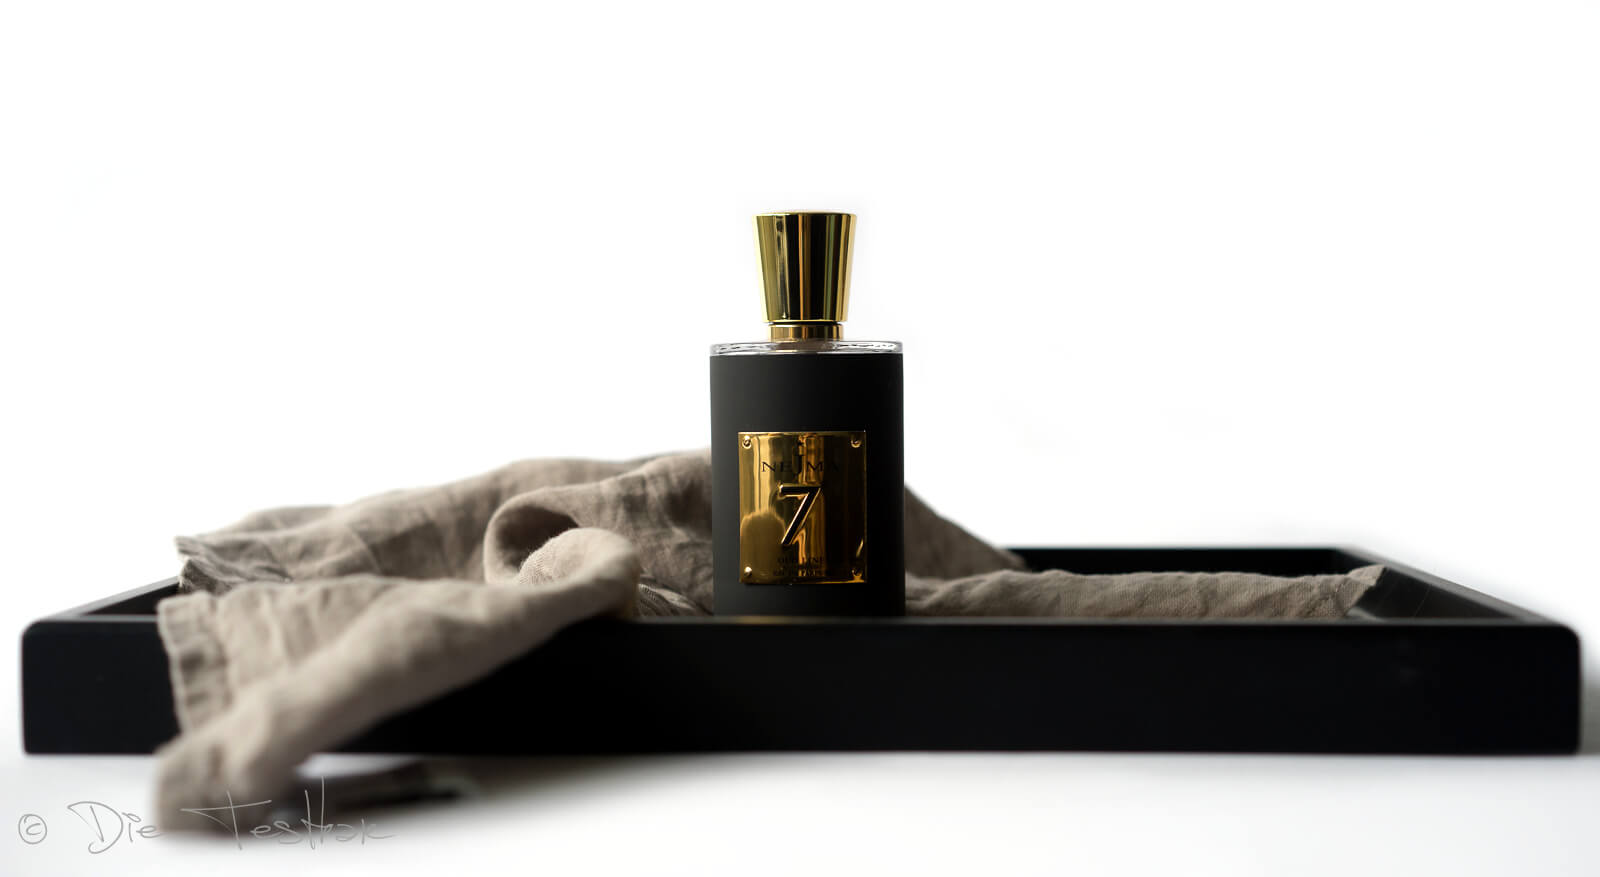 Isis Parfums Diffusion - KoEptYs - Eau de Parfum - Der erste Promi Luxus Duft von Booba by Nejma